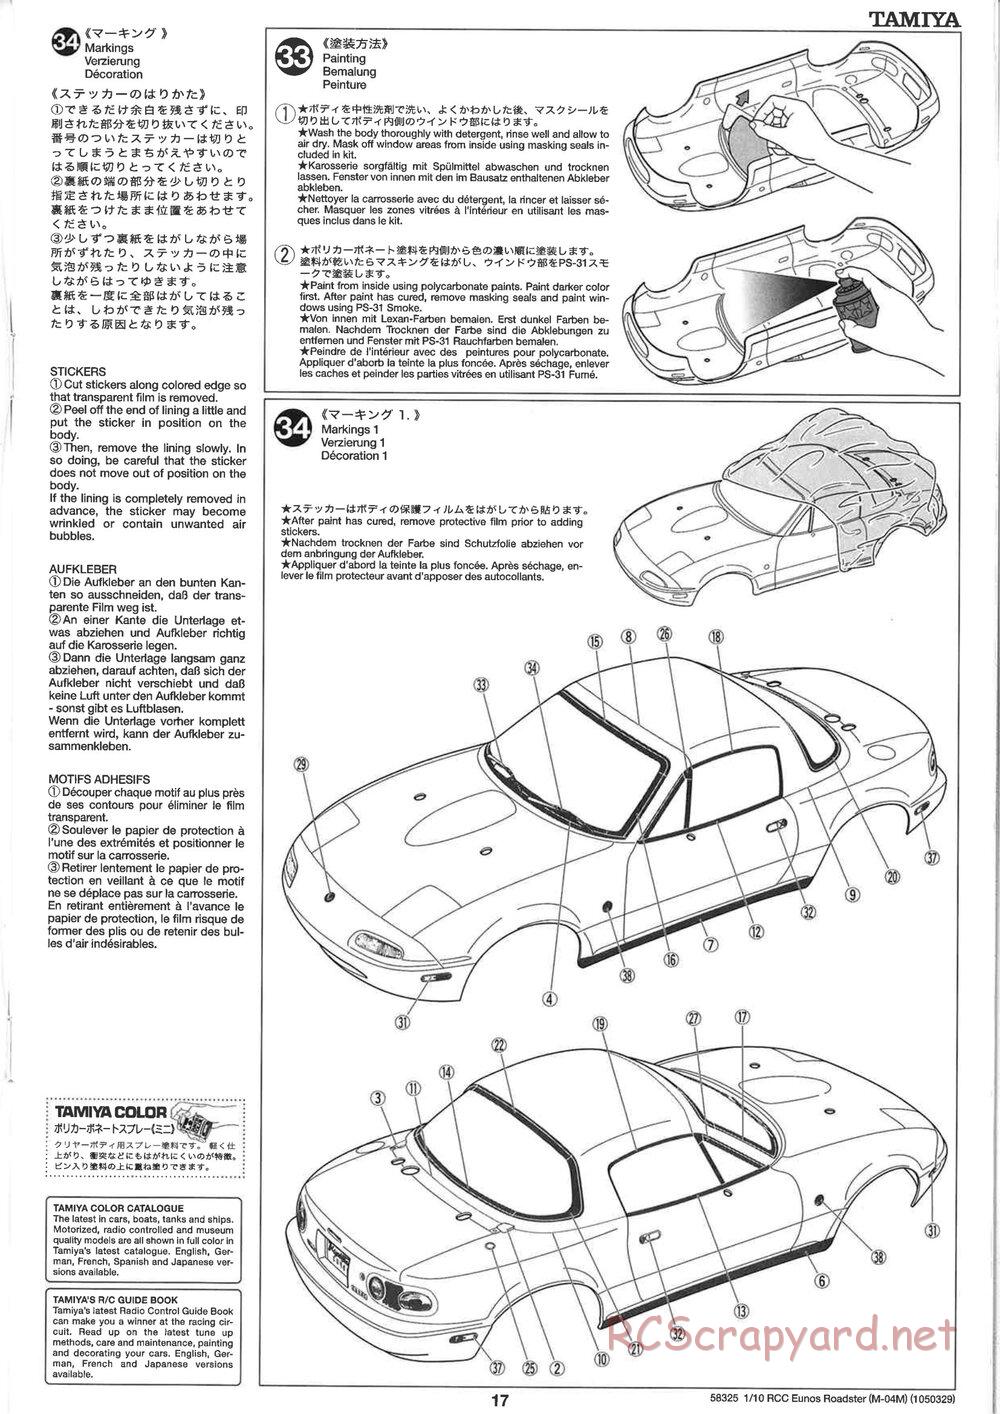 Tamiya - Eunos Roadster - M04M Chassis - Manual - Page 17